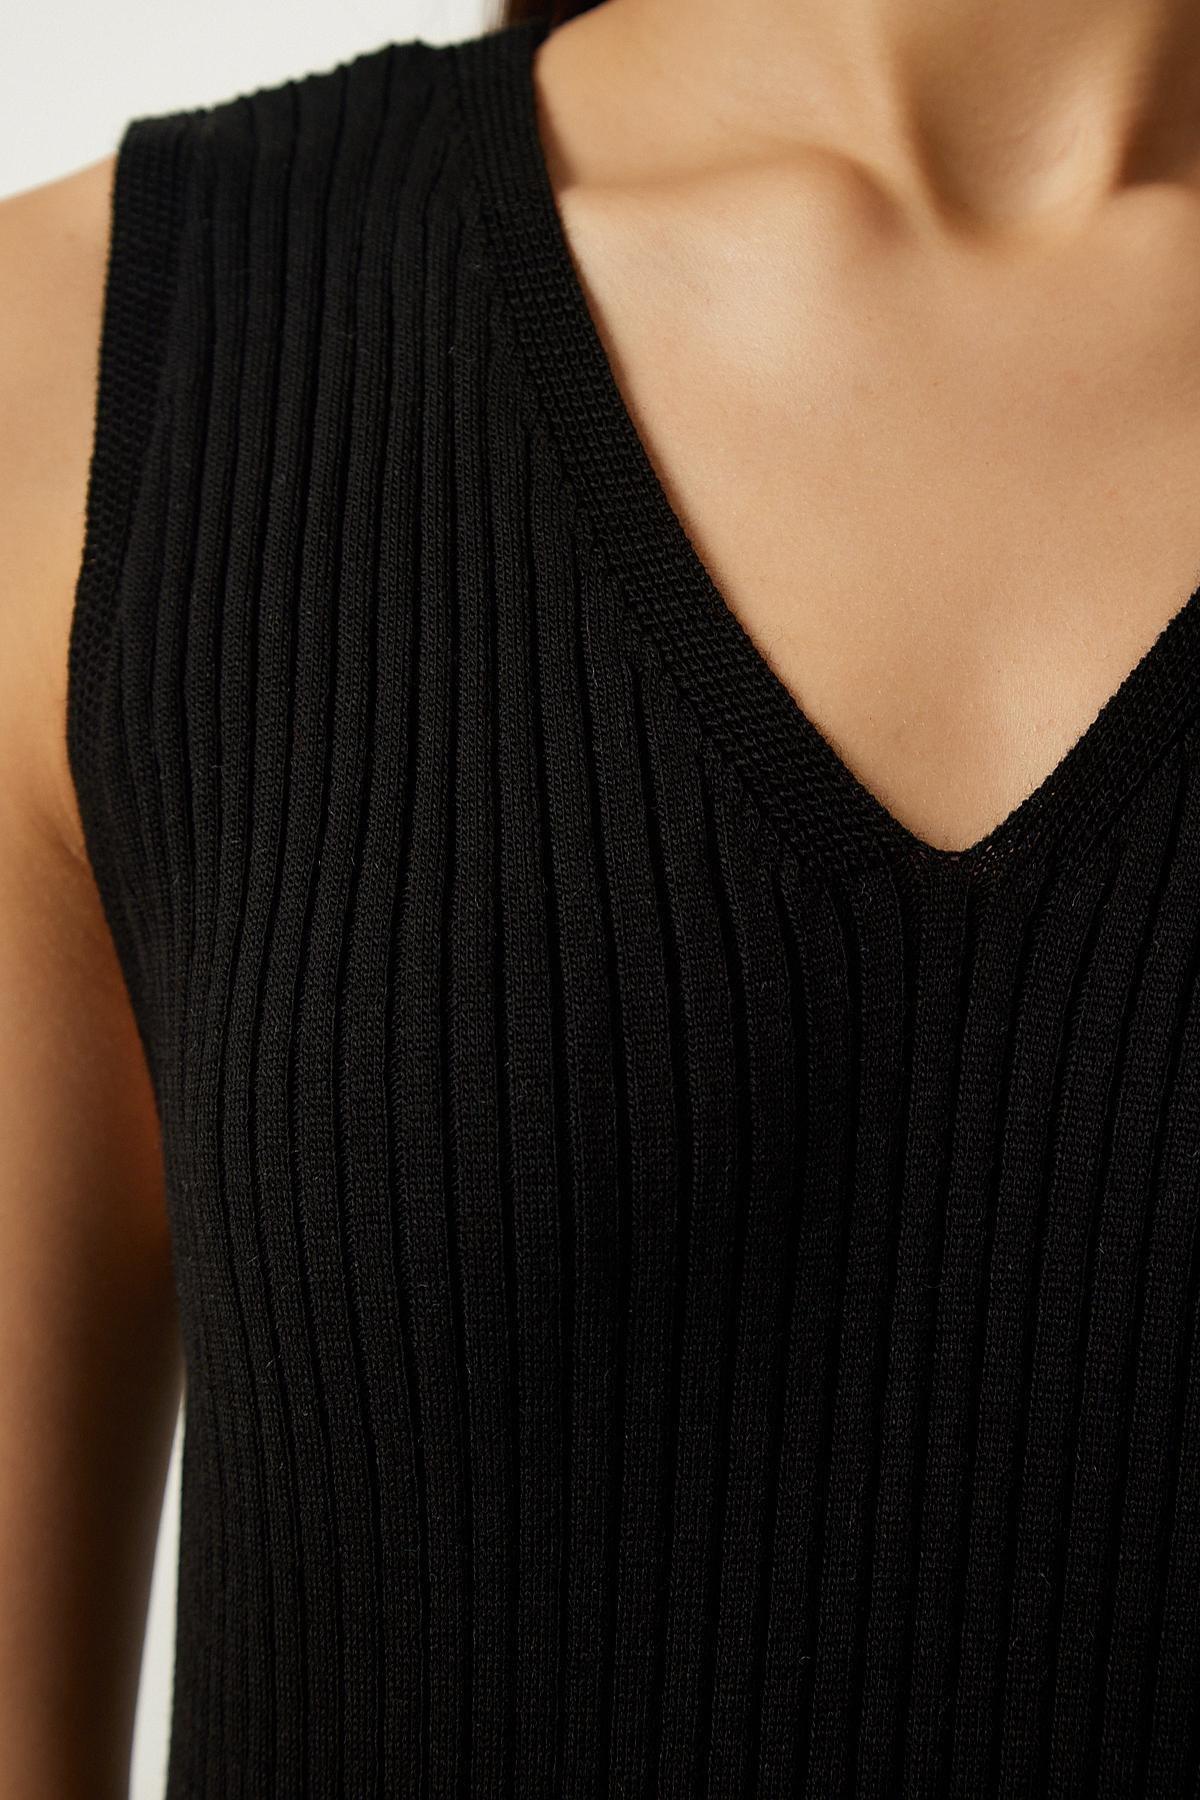 Happiness Istanbul - Womens Black Striped Sweater Dress Knitwear Suit KG00008, 2 x